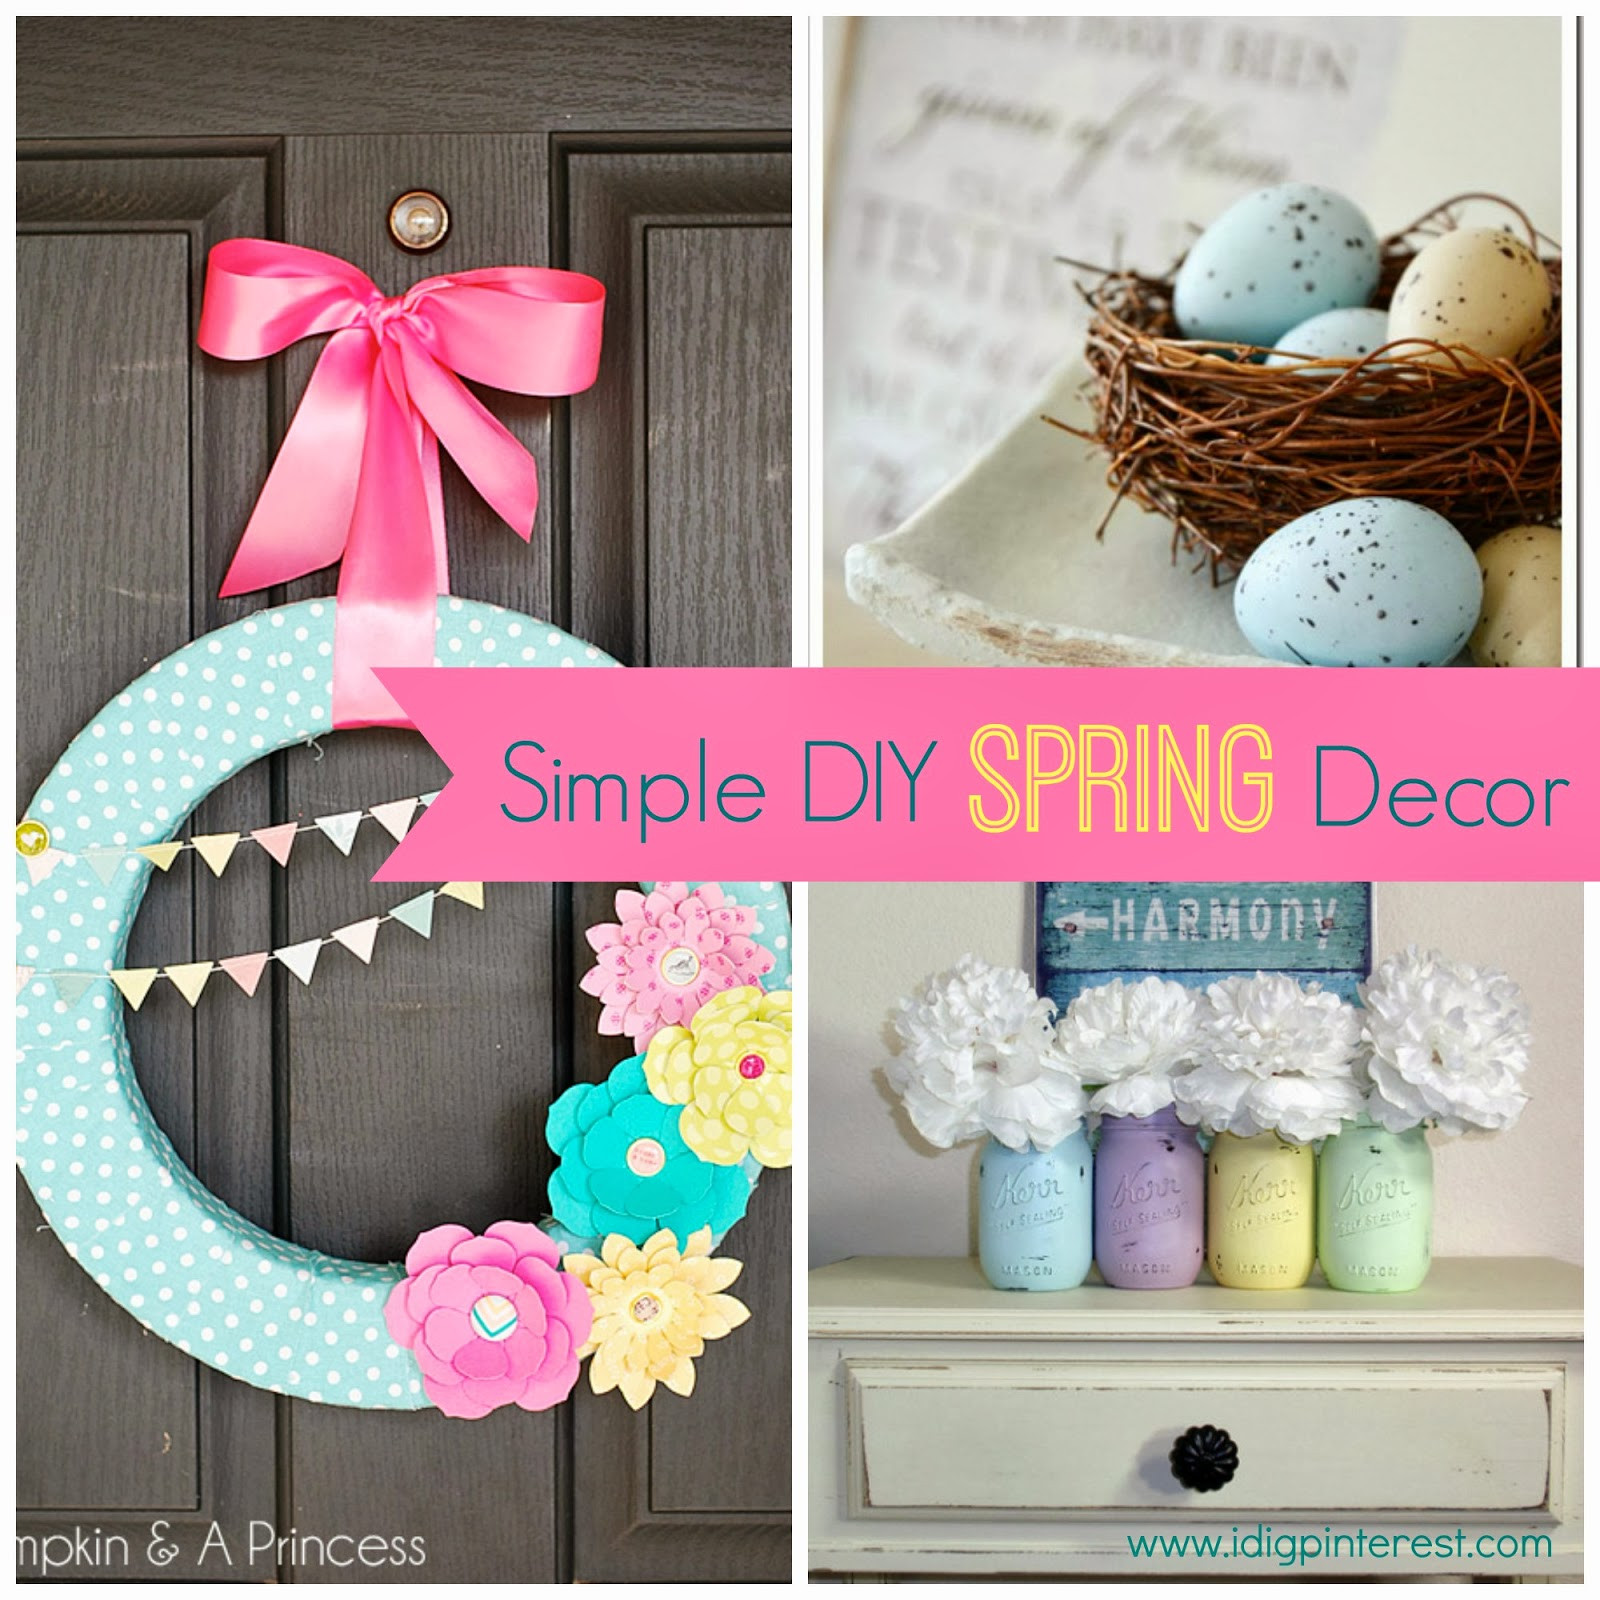 DIY Home Decorating Pinterest
 Simple DIY Spring Decor Ideas I Dig Pinterest